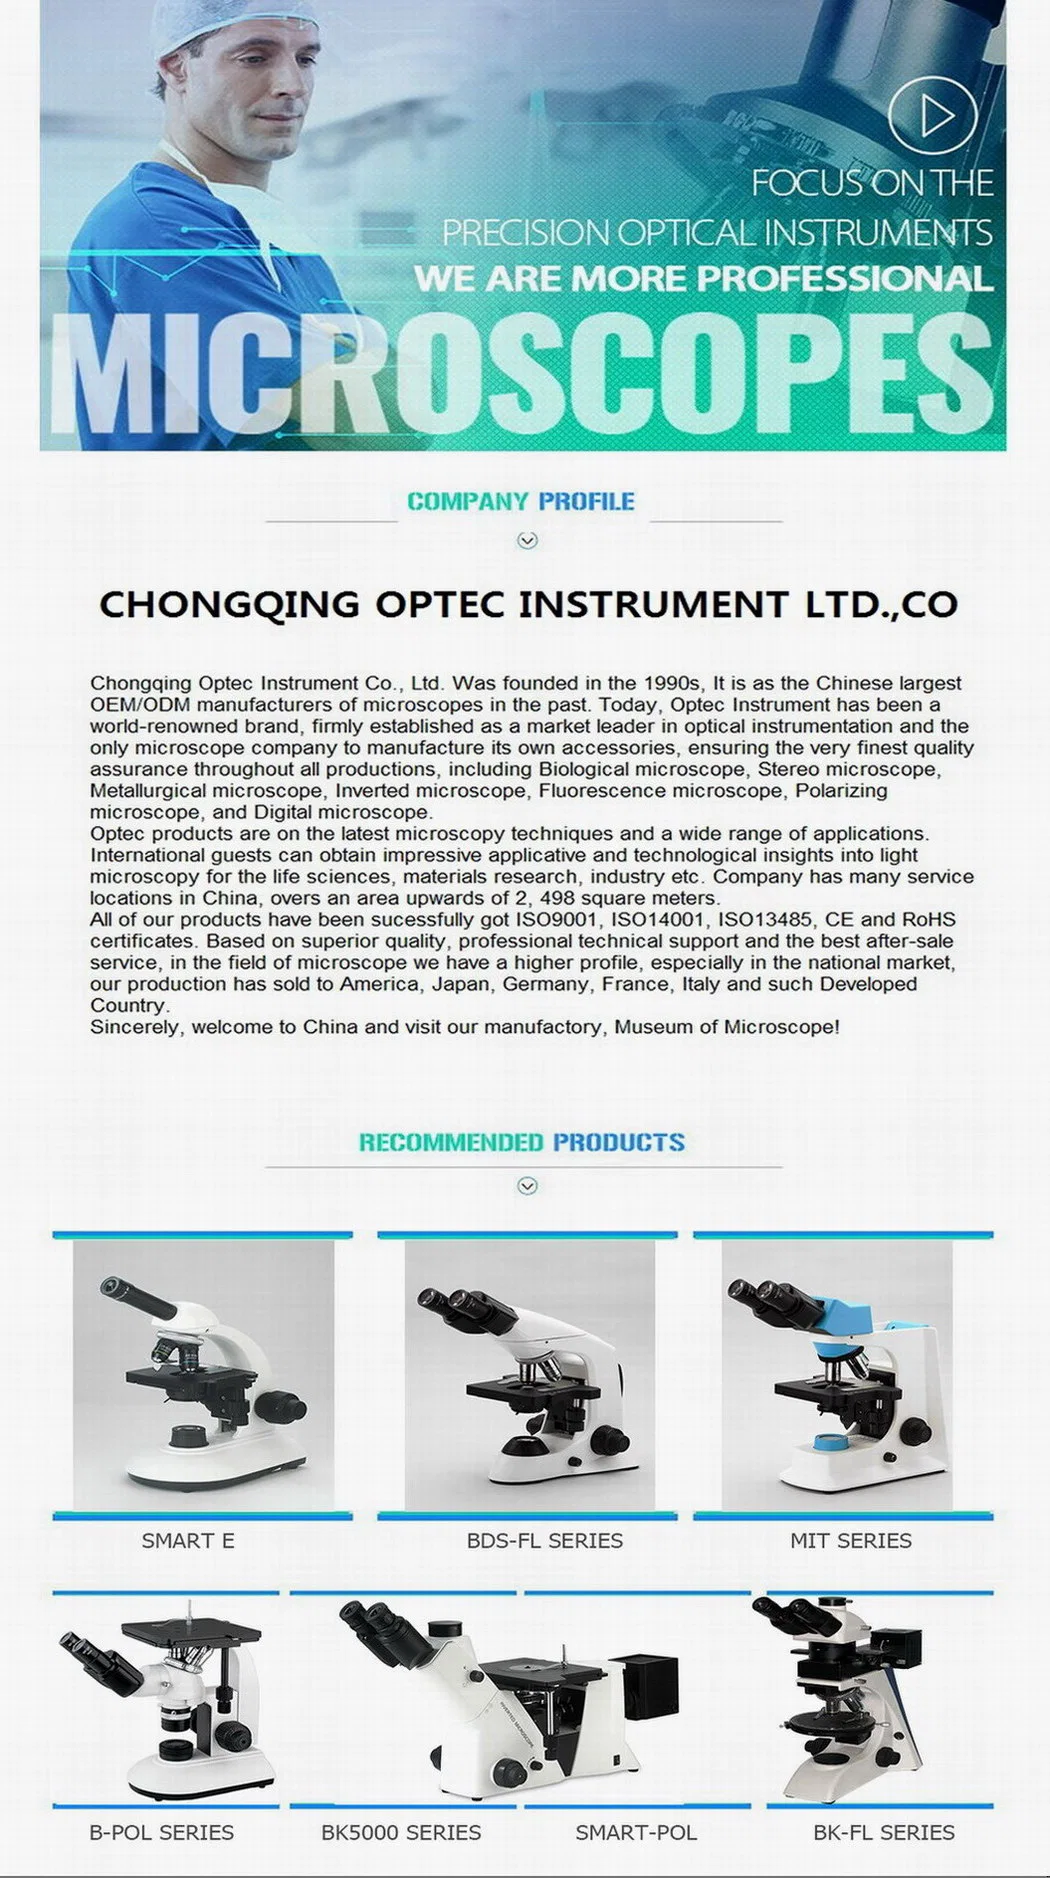 Measuring Instrument Toolmaker Microscope for Optical Microscope